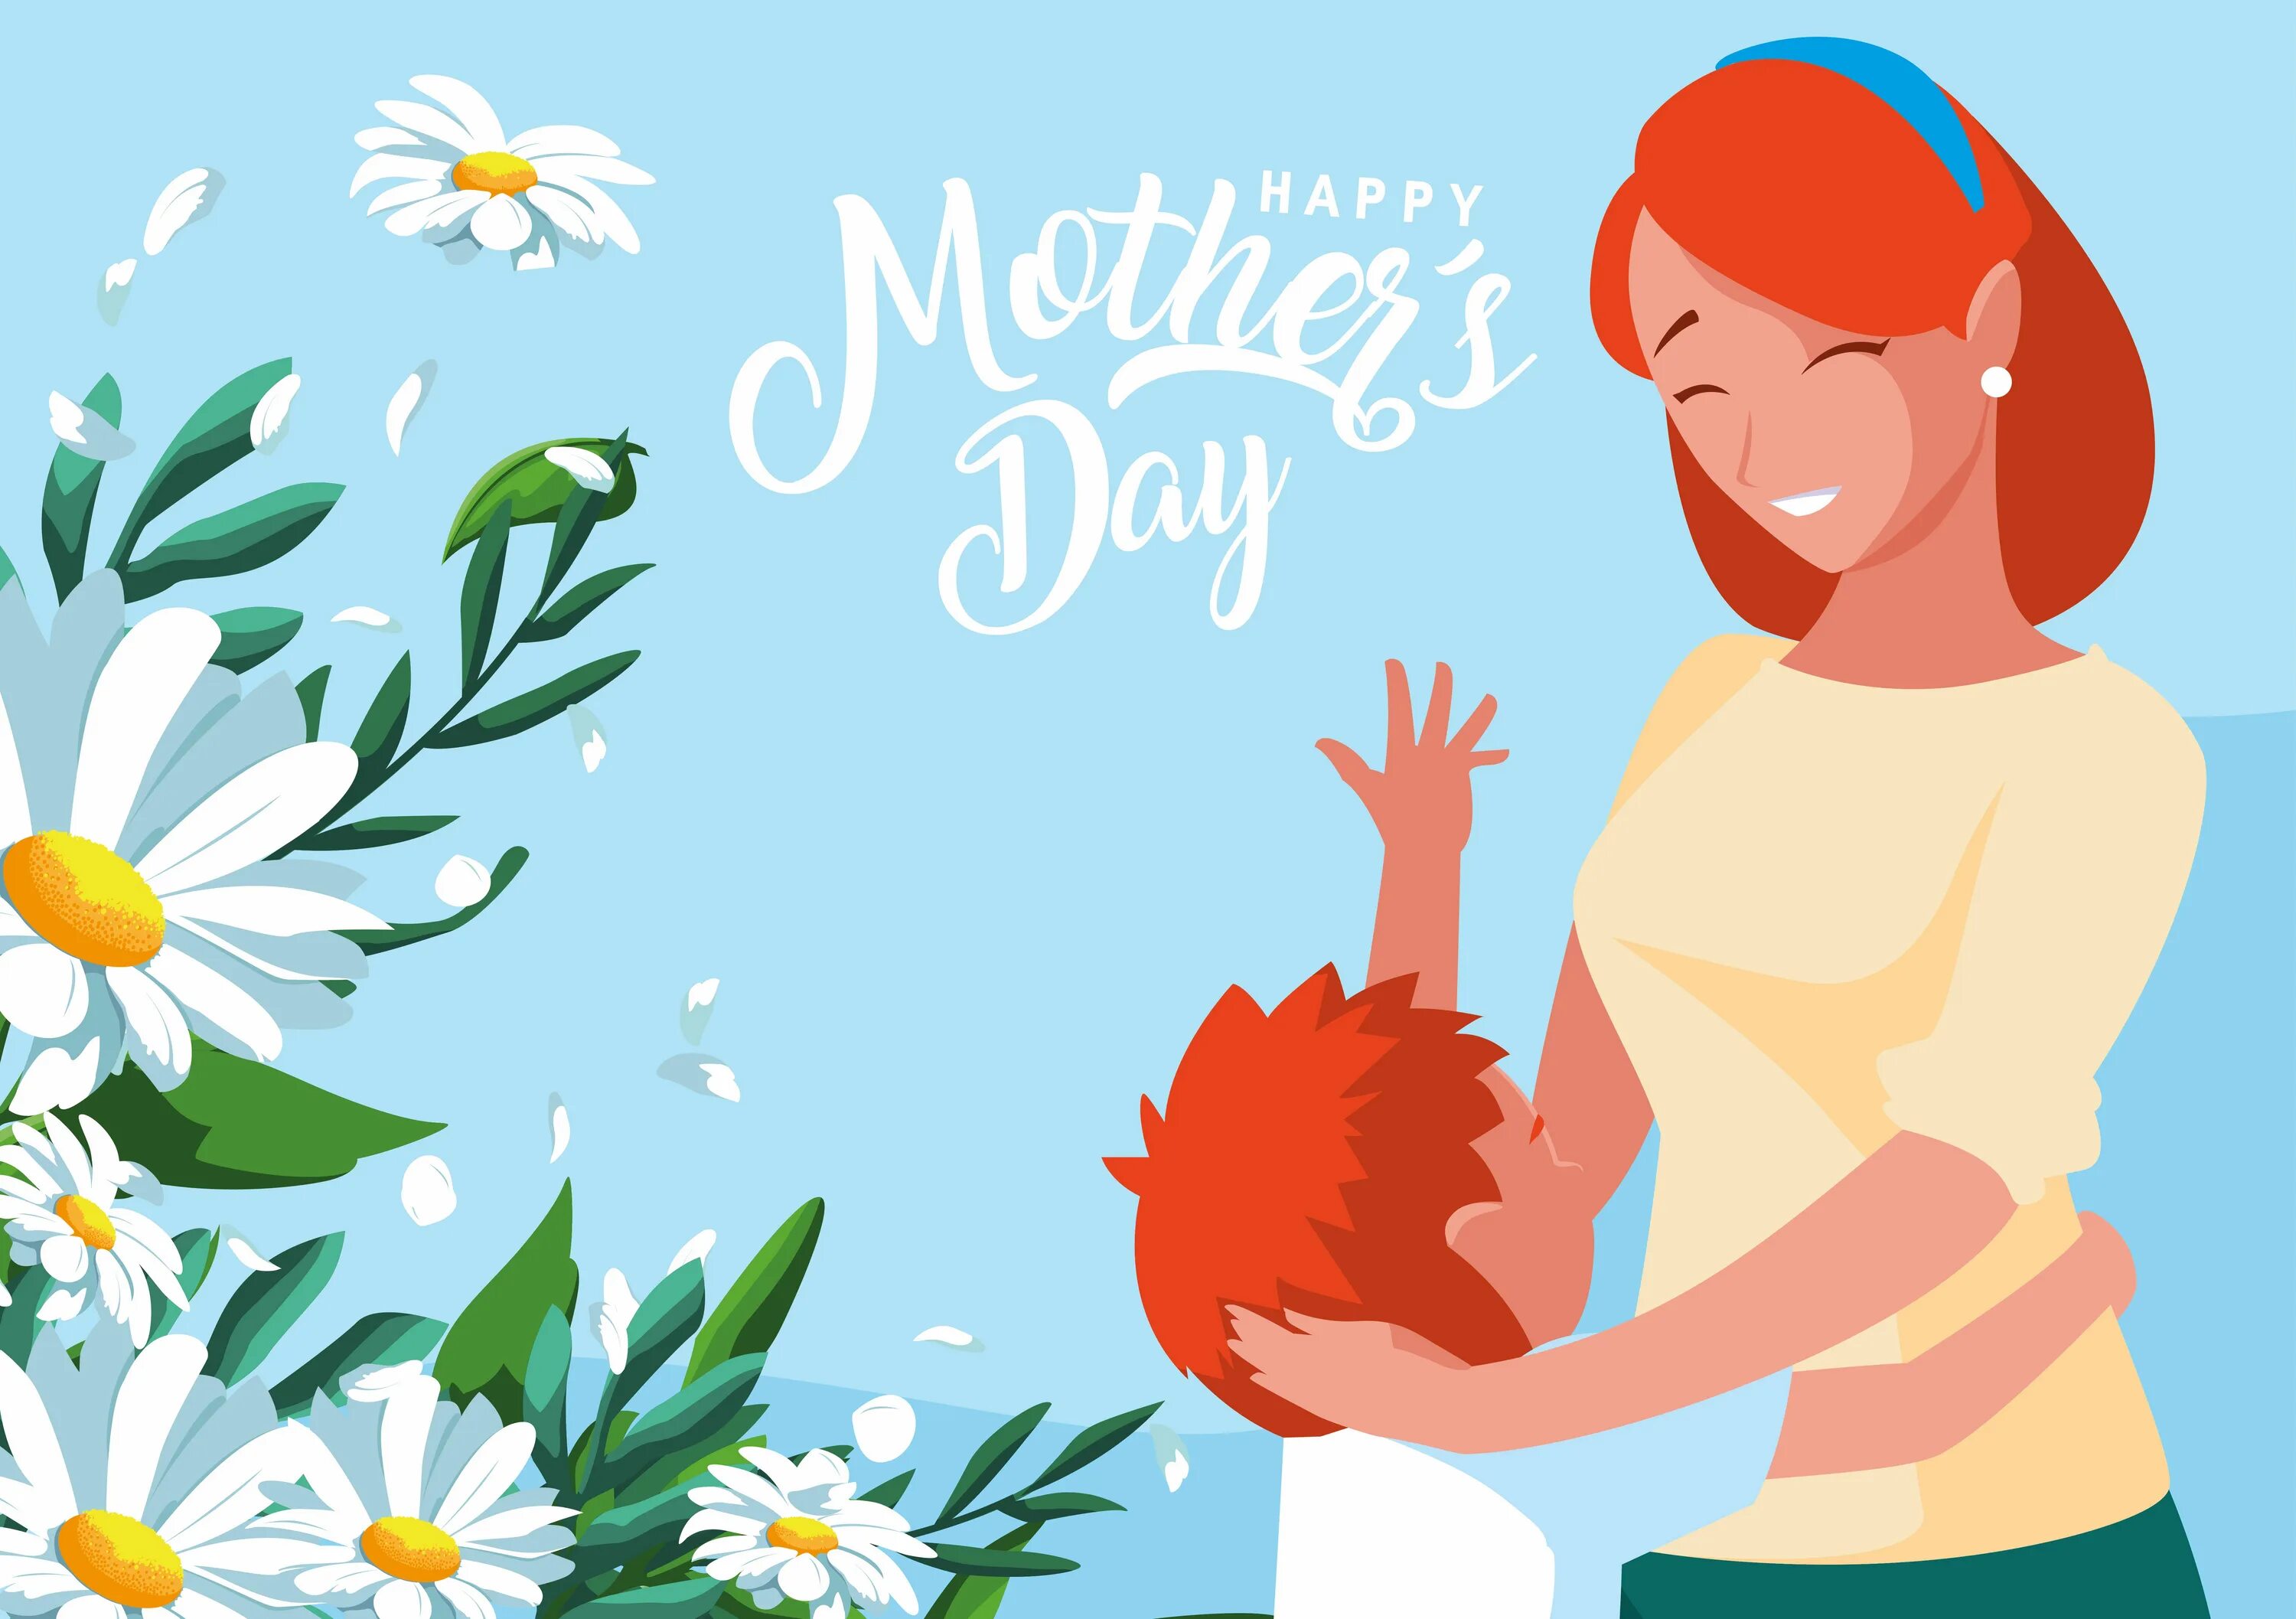 Плакат ко Дню матери. День матери иллюстрации. Открытки с днём матери. День матери вектор.